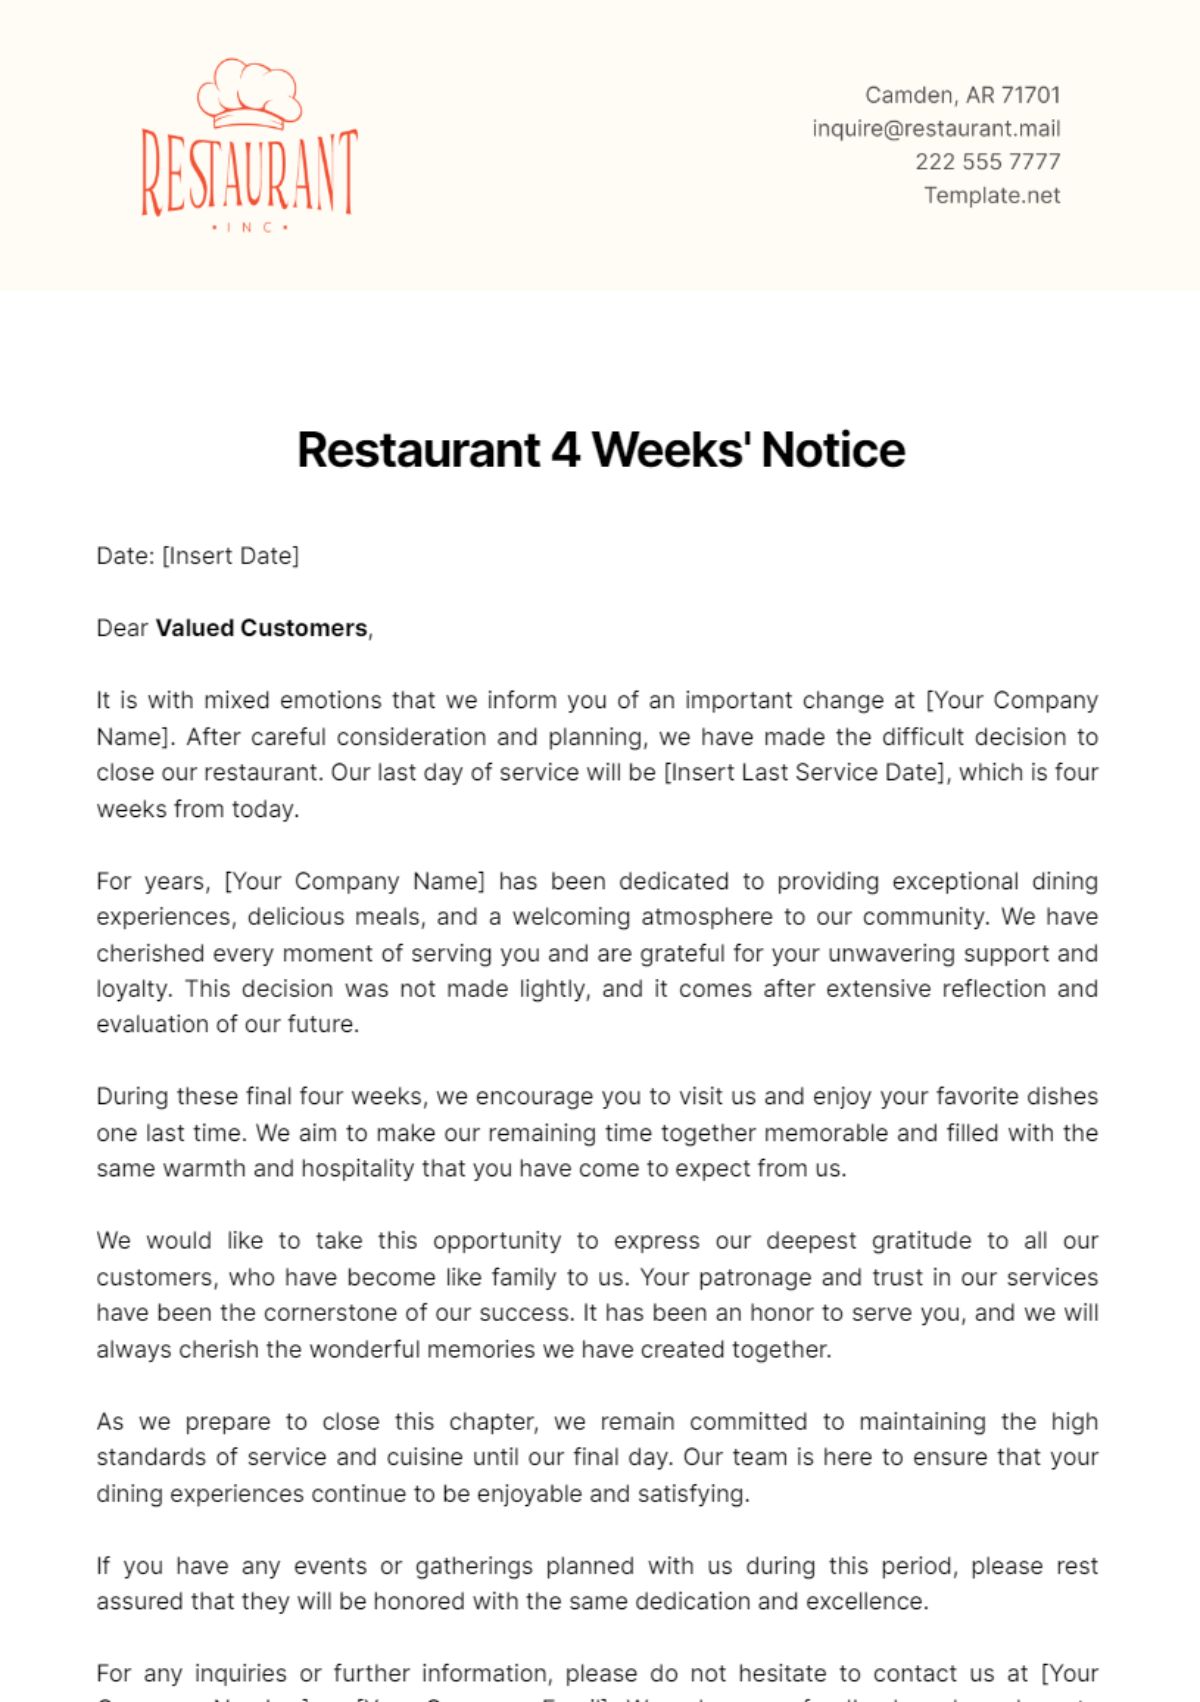 Free Restaurant 4 Weeks' Notice Template